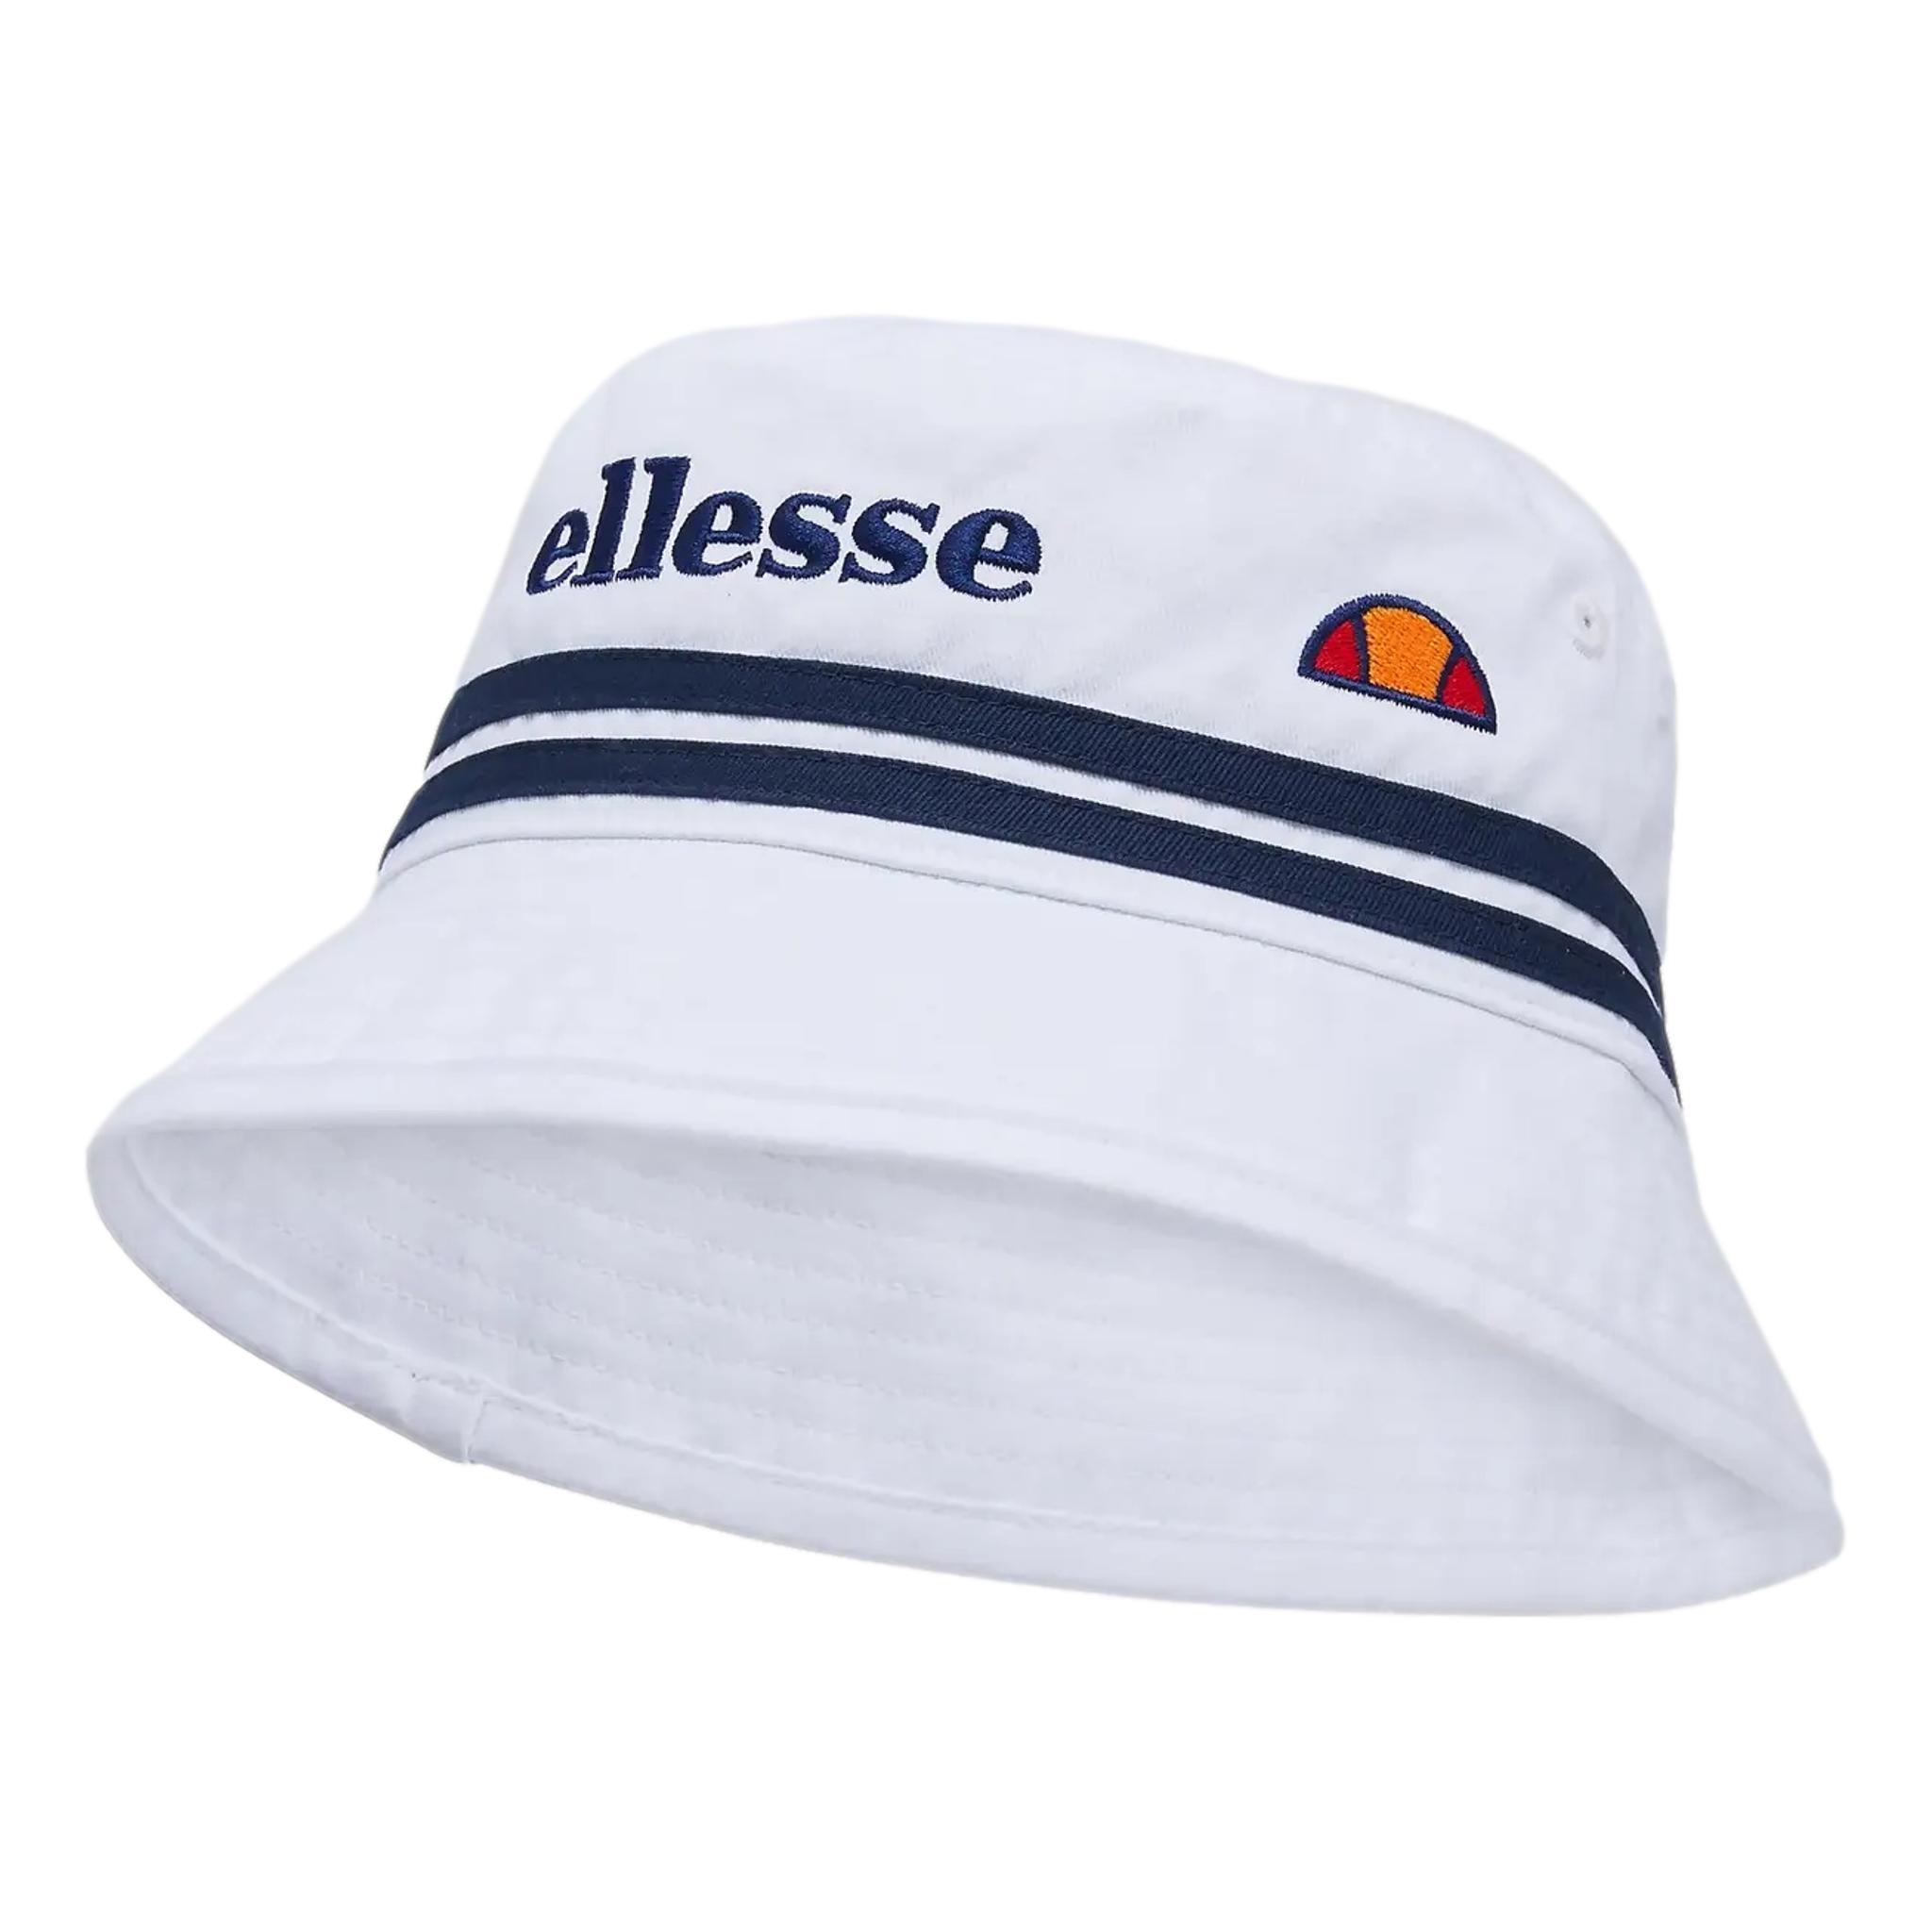 Lorenzo | ellesse eBay for Size Hat online Festival Fashion Black One - Bucket sale Heritage